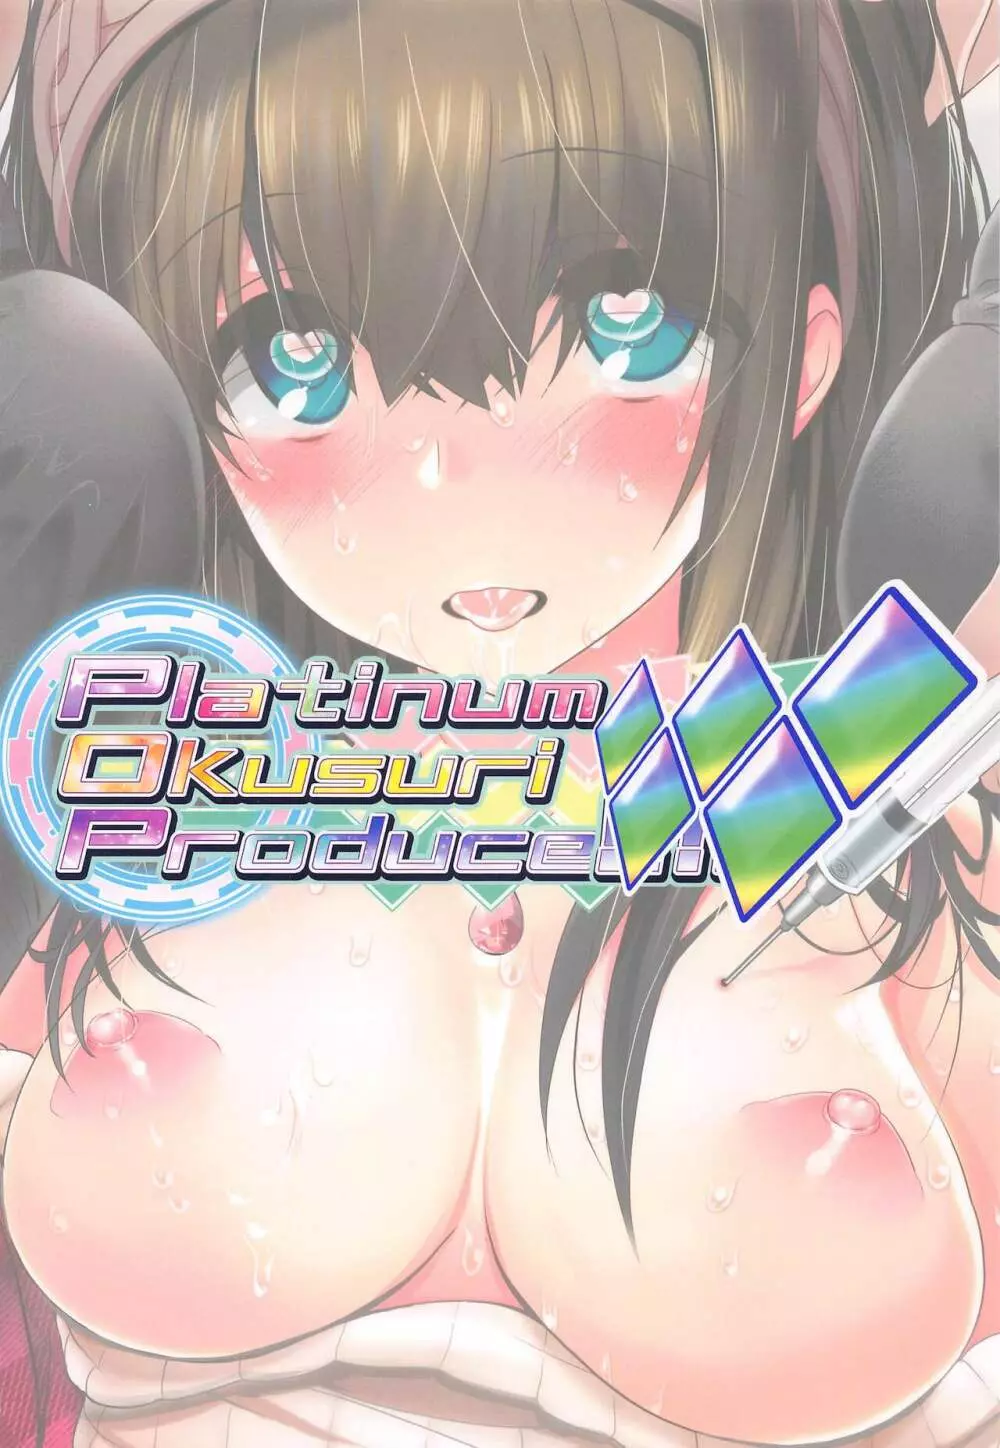 Platinum Okusuri Produce!!!! ◇◇◇◇◇ - page18